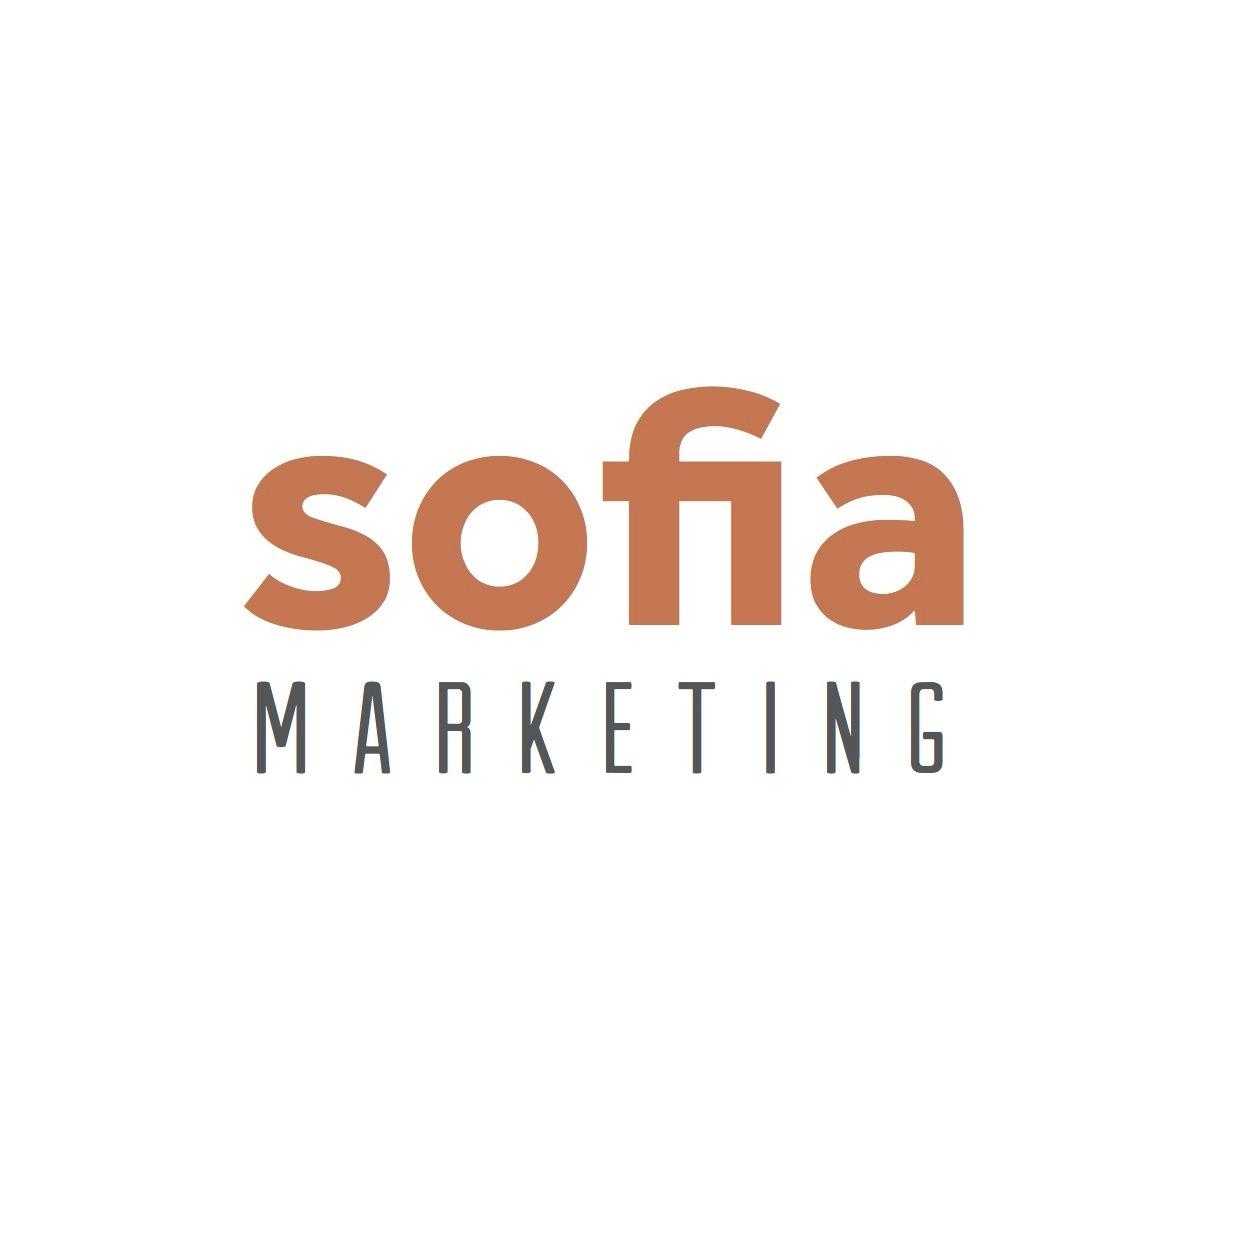 Sofia Marketing Photo